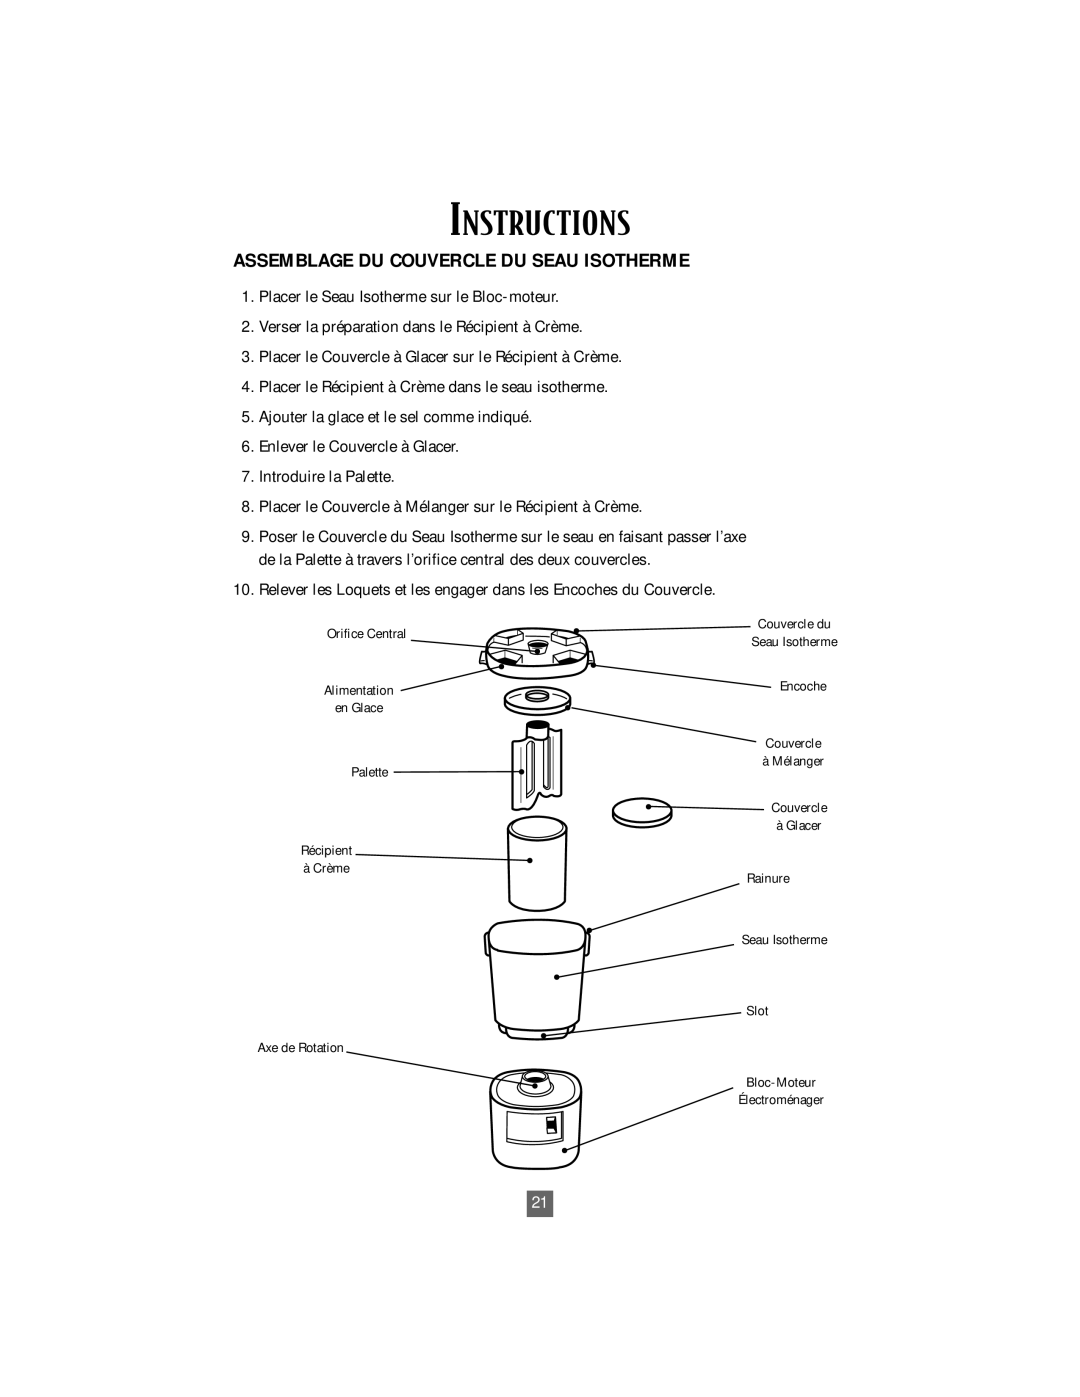 Oster 4746 instruction manual Instructions, Assemblage DU Couvercle DU Seau Isotherme 